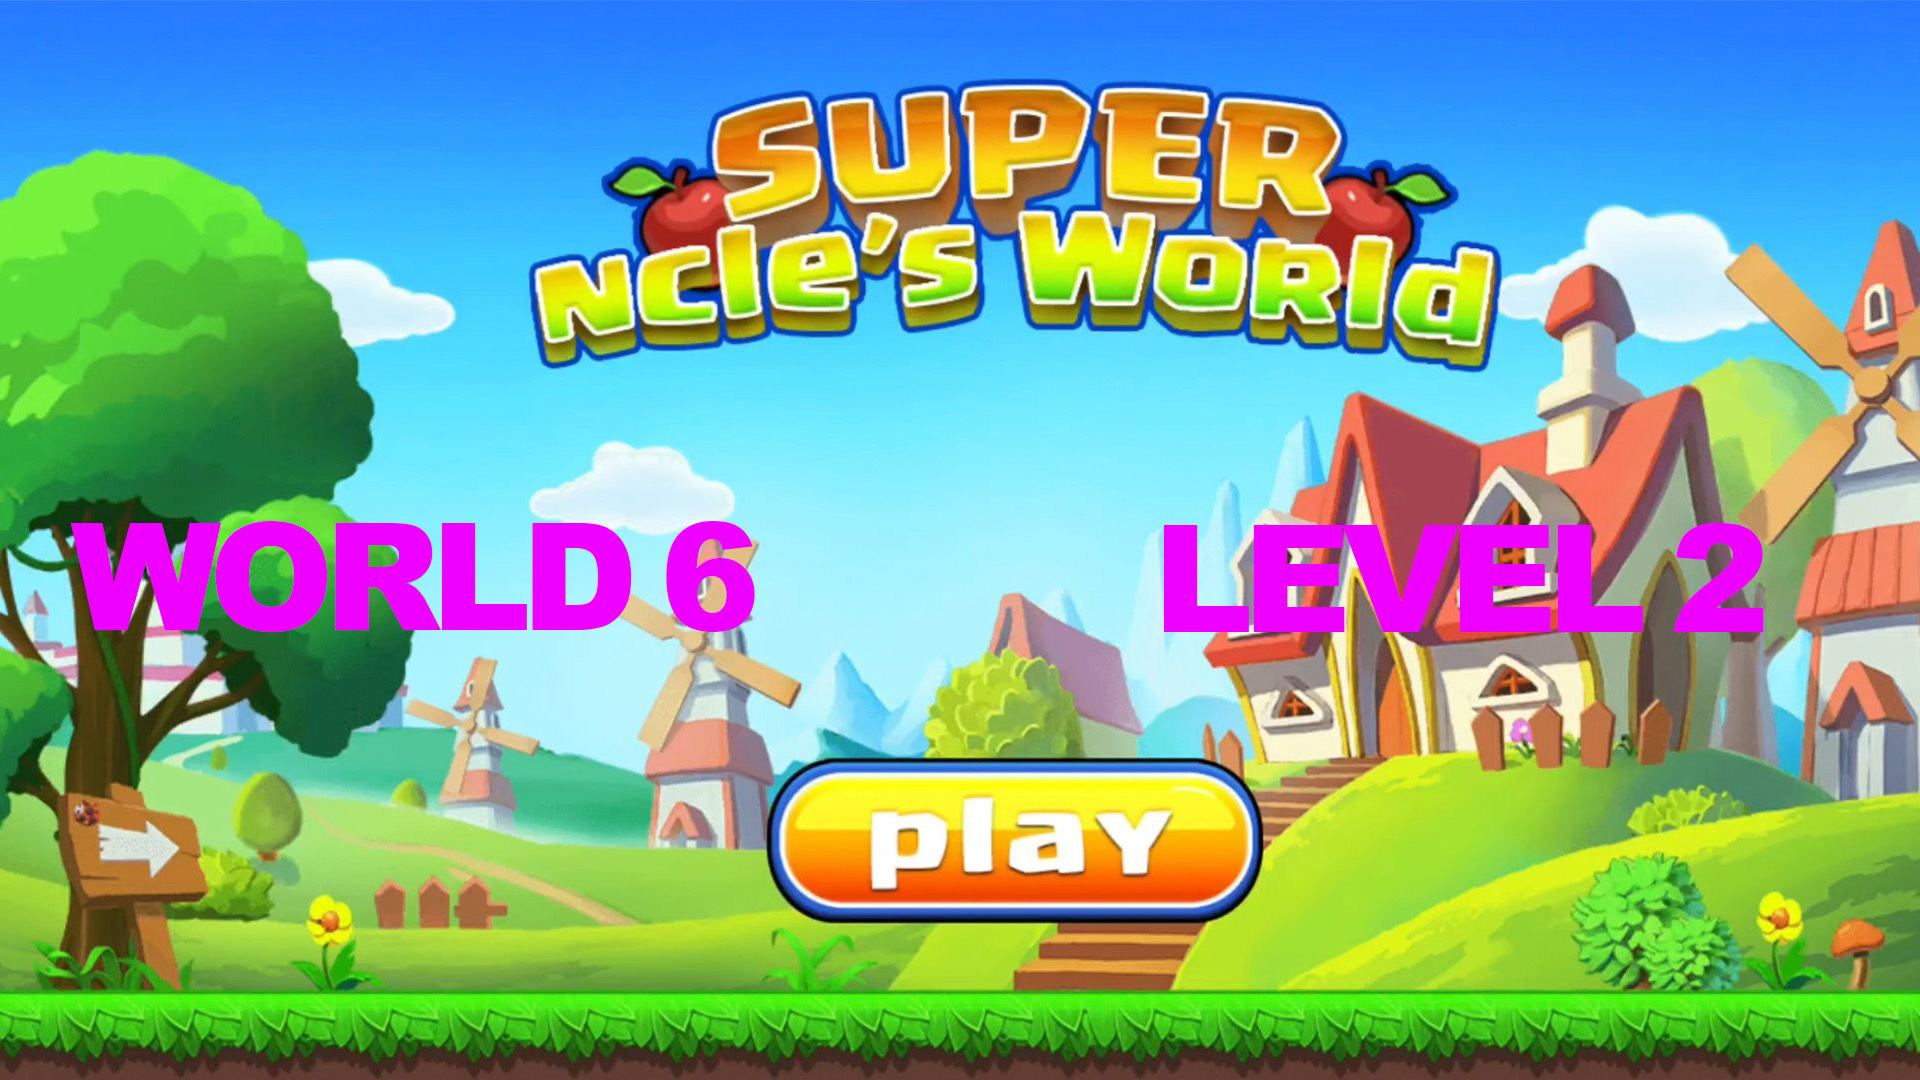 Super ncle's  World 6. Level 2.